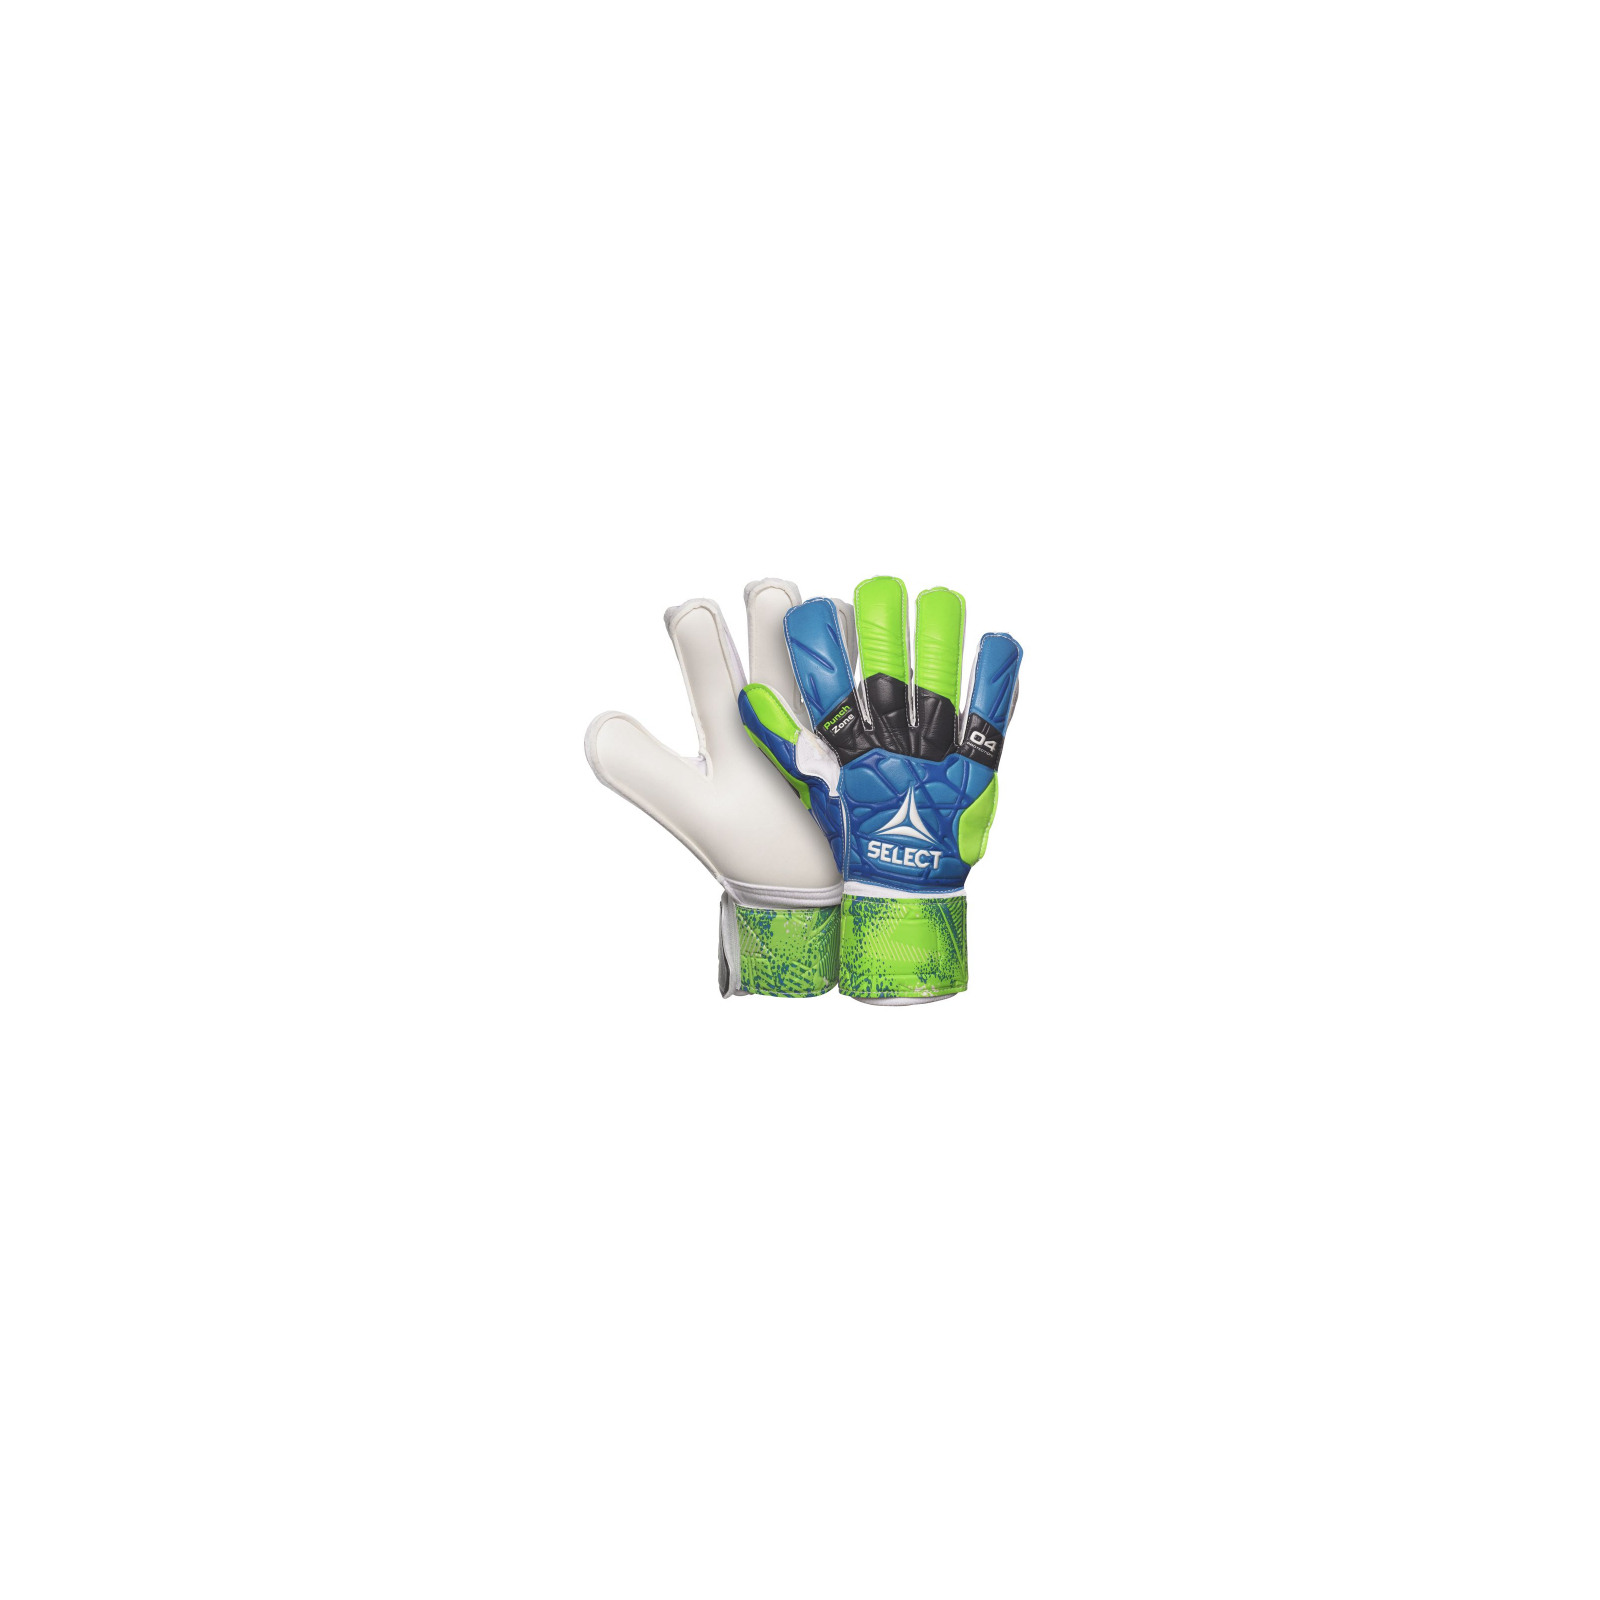 Вратарские перчатки Select Goalkeeper Gloves 04 Hand Guard 601040-332 синій, зелений Діт 5 (5703543200498)